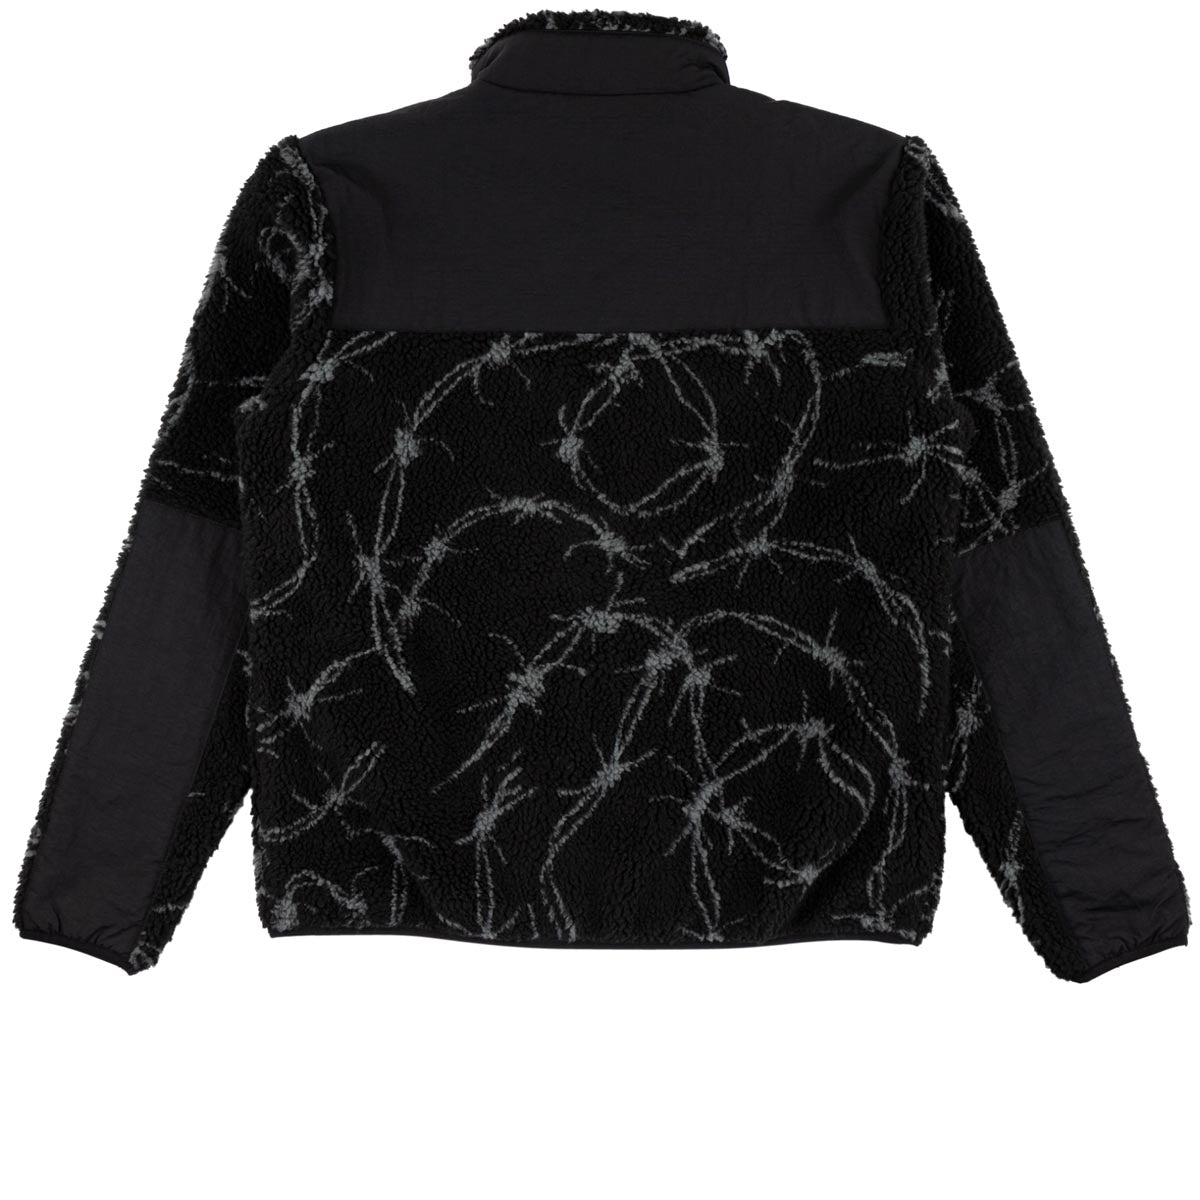 Welcome Wire Full-zip Sherpa Fleece Sweatshirt - Black image 4